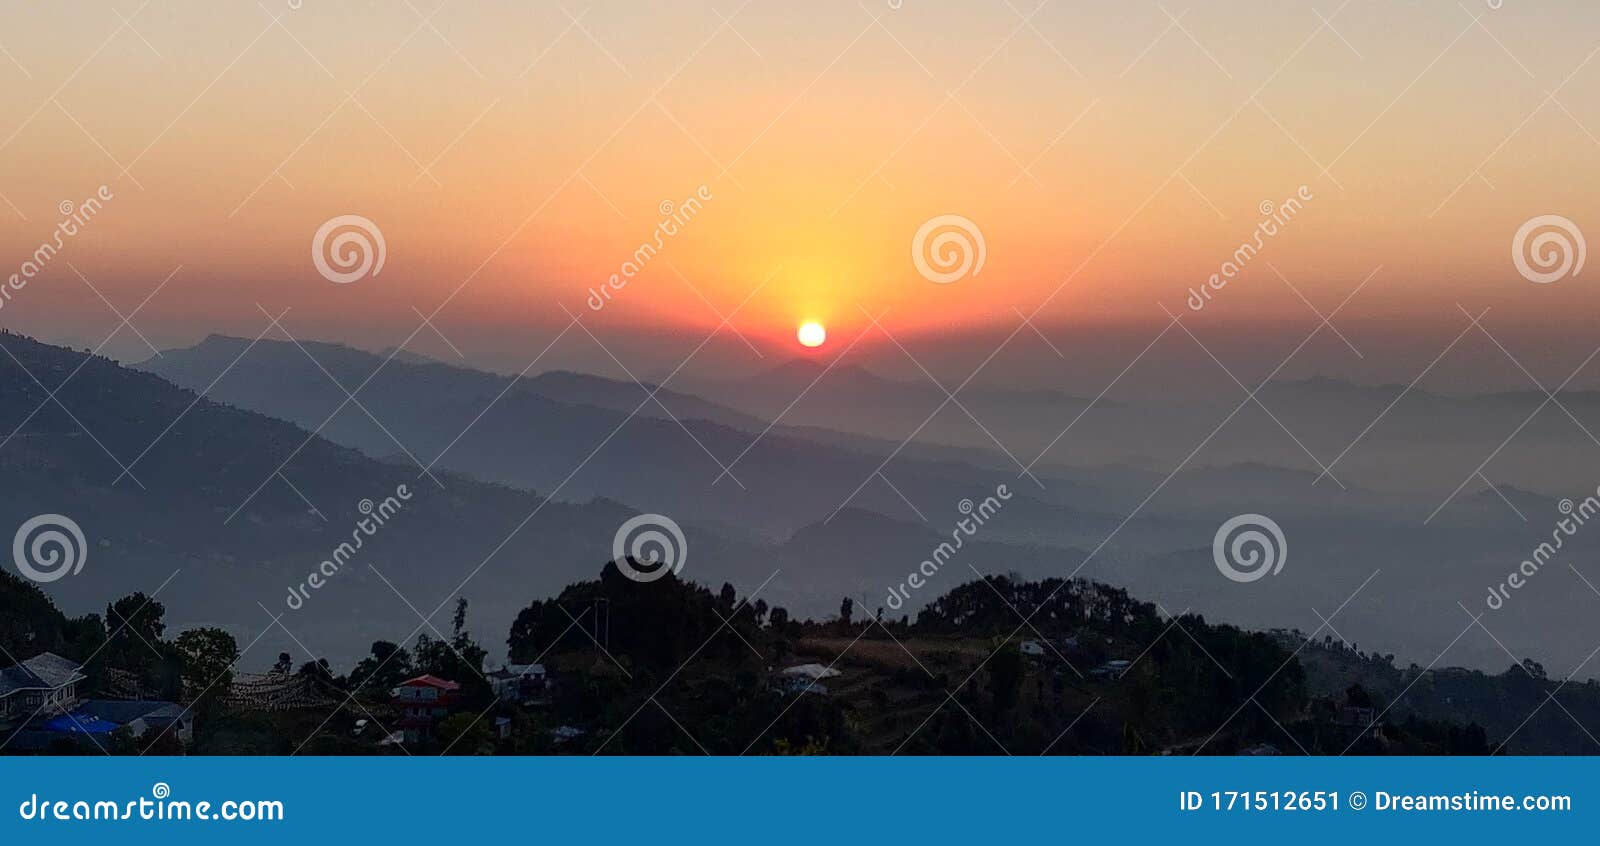 sarangkot sunrise point in pokhra,nepal